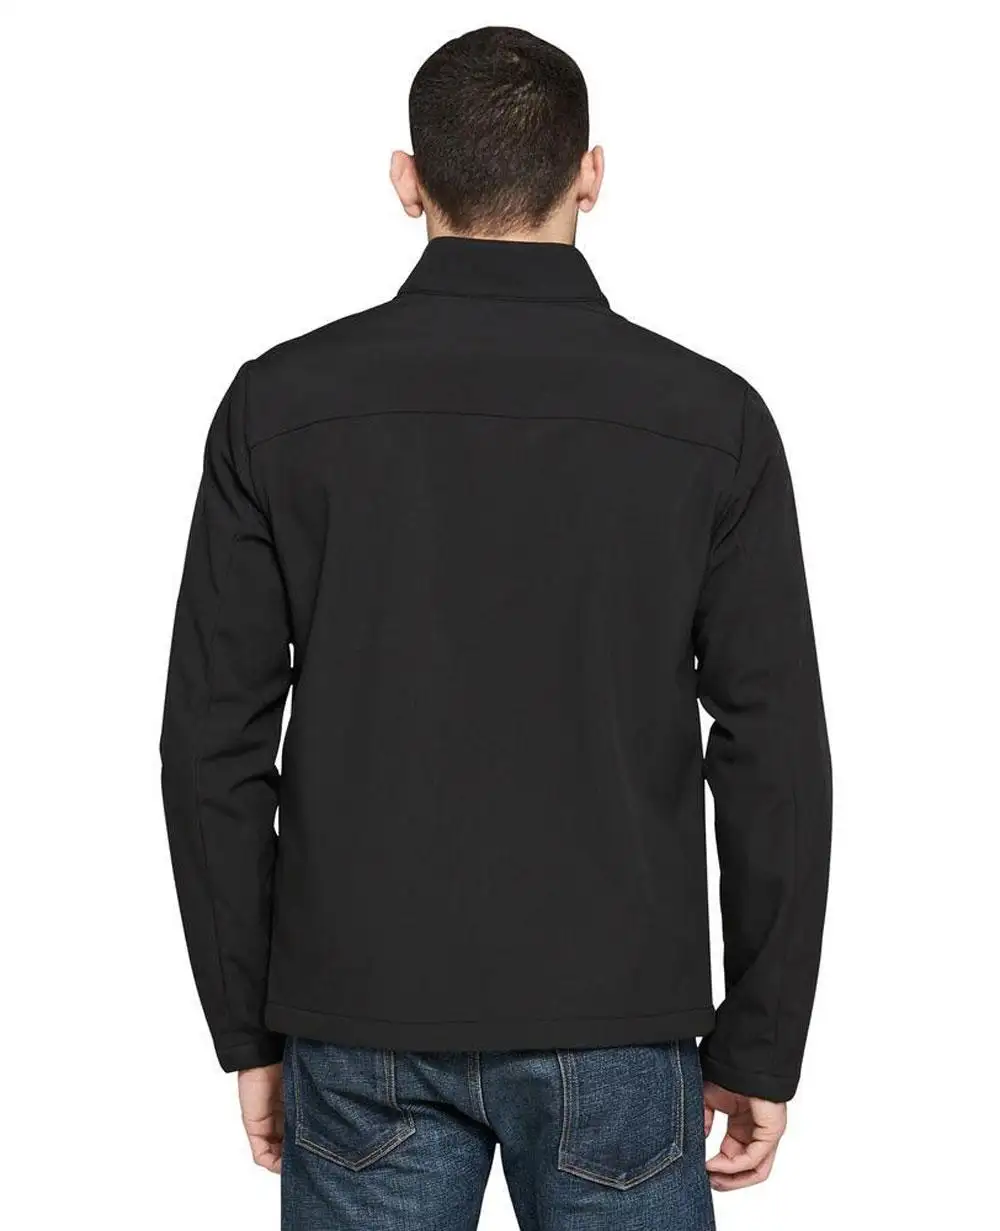 New high quality shower resistant jacket for men long line green bomber jacket wholesale softshell men